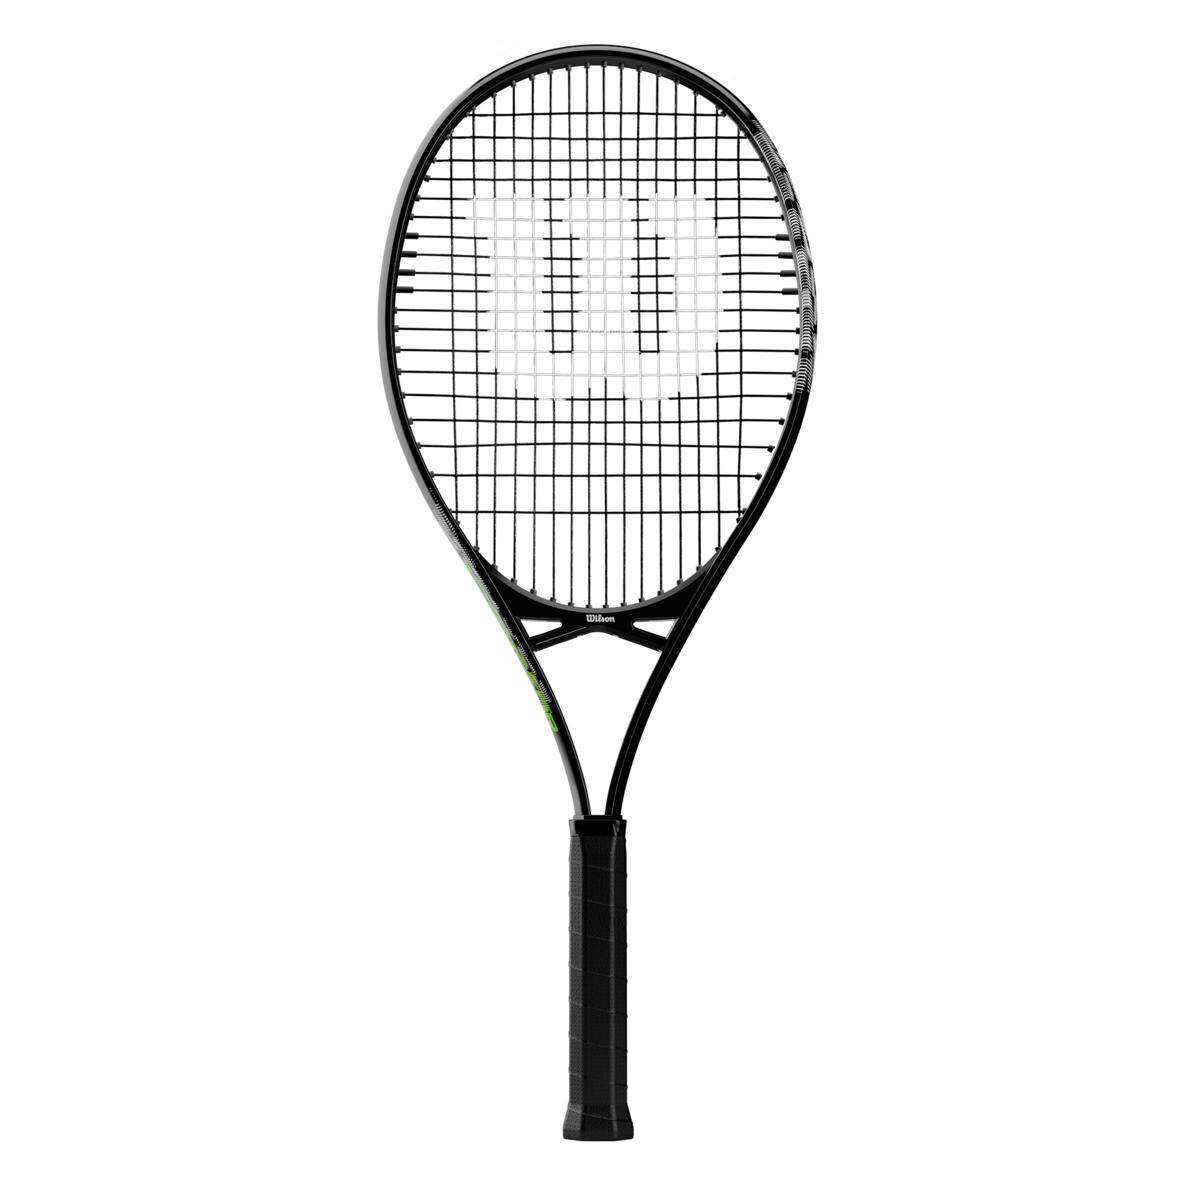 Kit Pelotas Tenis X3 Und Deporte Juego Tennis Raquetas